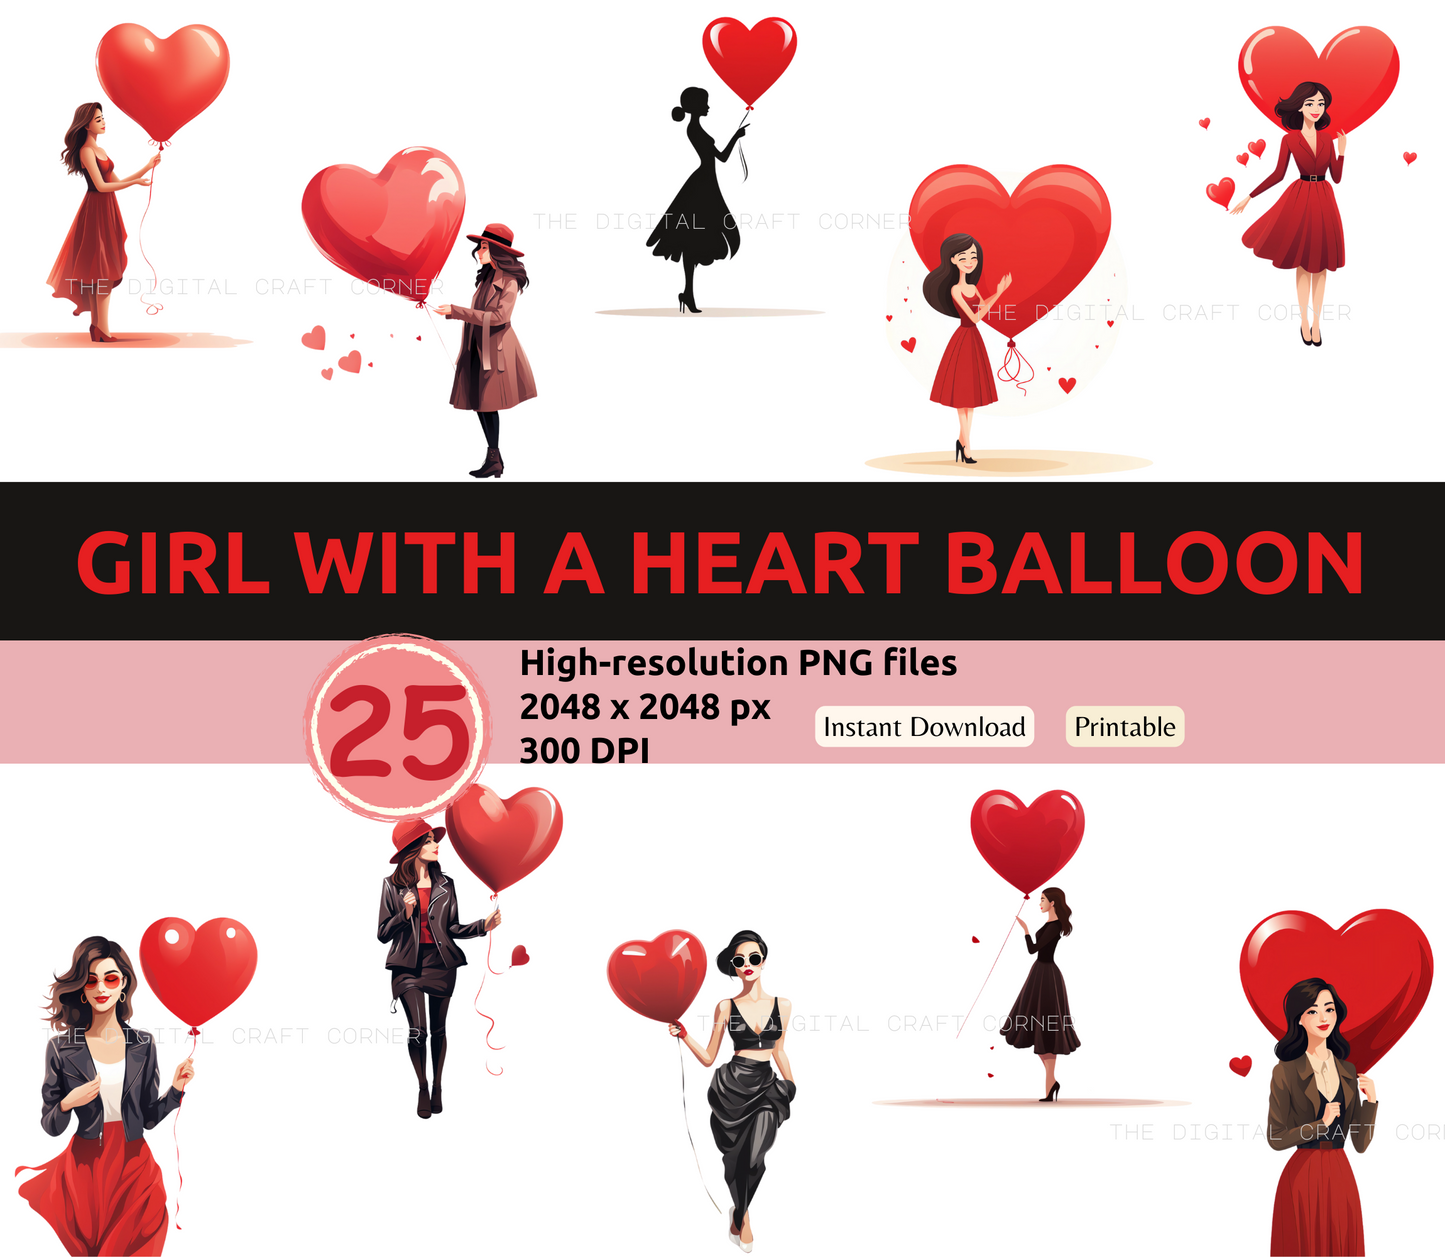 Girl with a Heart Balloon